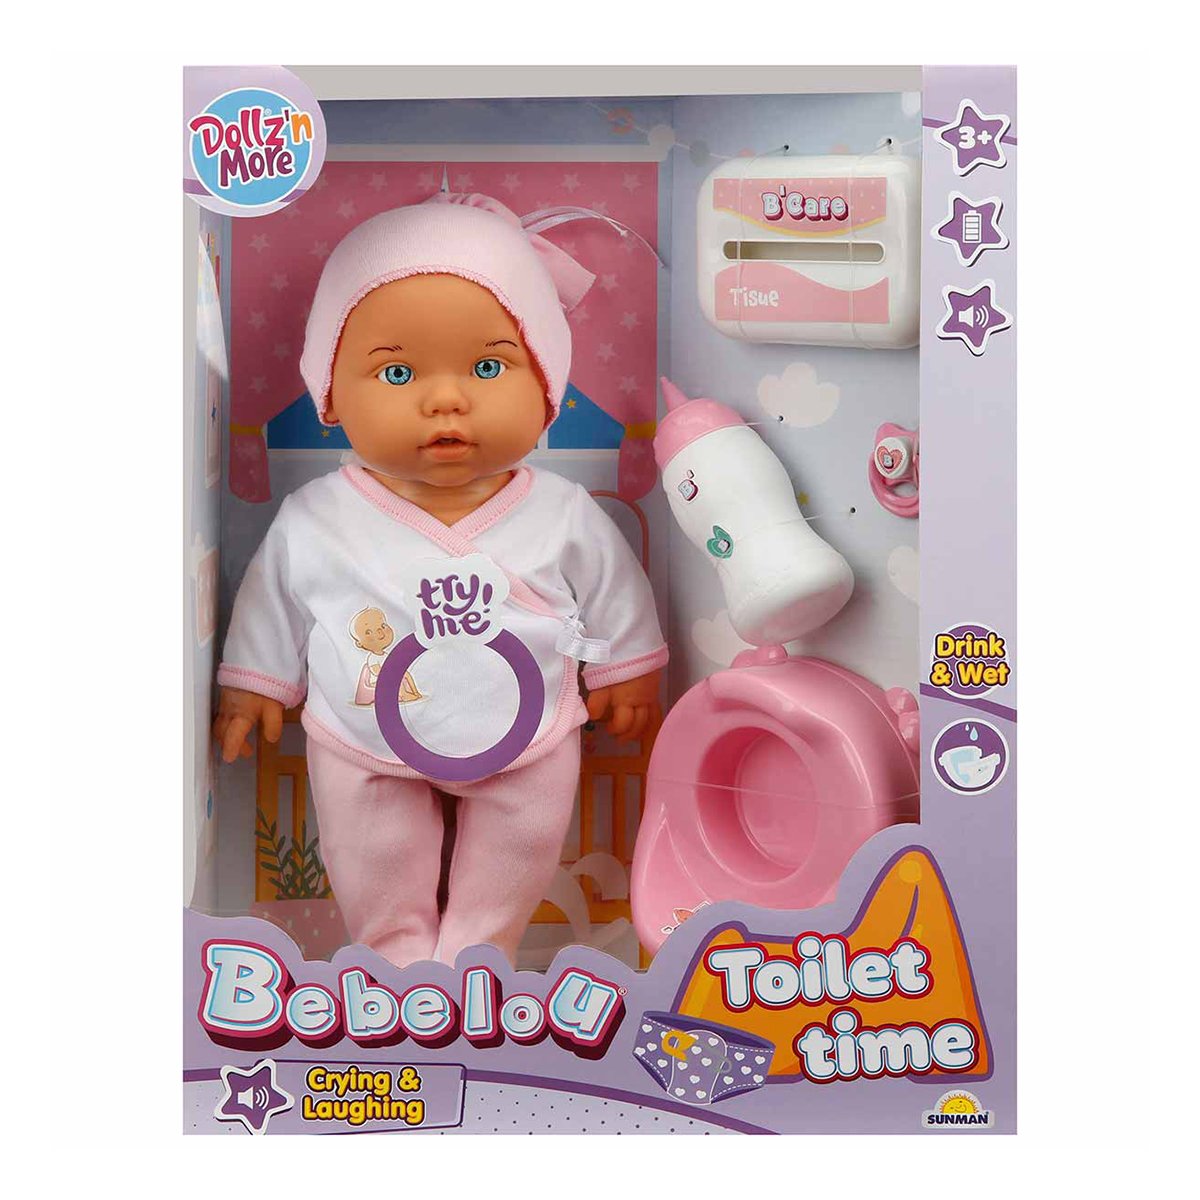 Papusa bebelus Bebelou, Dollzn More, Toilet Time, 35 cm, roz Bebelou imagine 2022 protejamcopilaria.ro